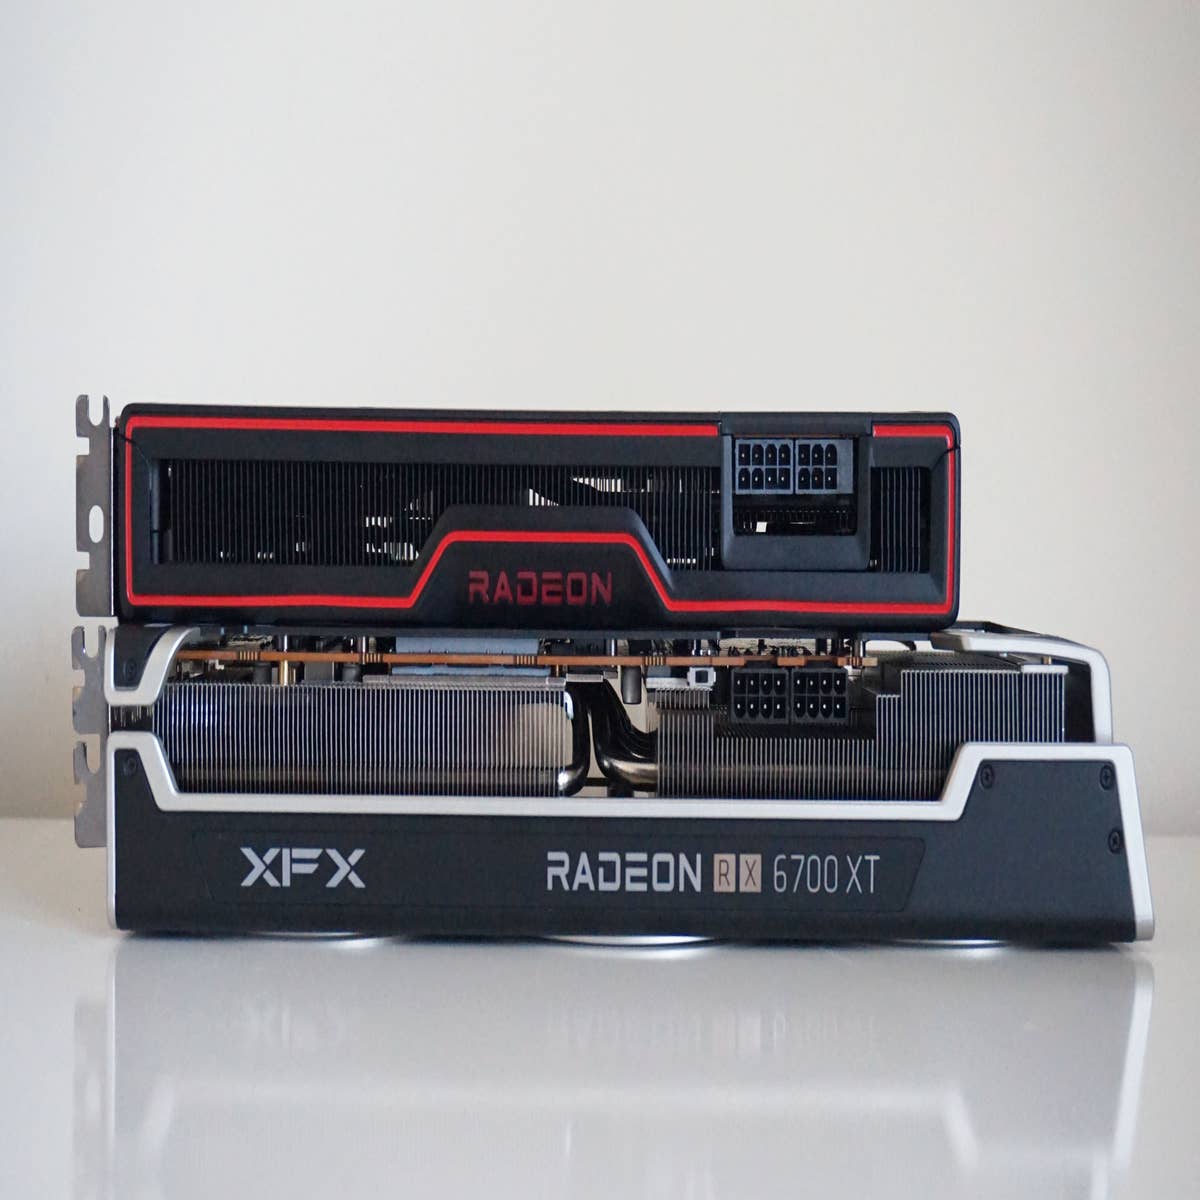 XFX Radeon RX 6700 XT Speedster Merc 319 Black Edition review